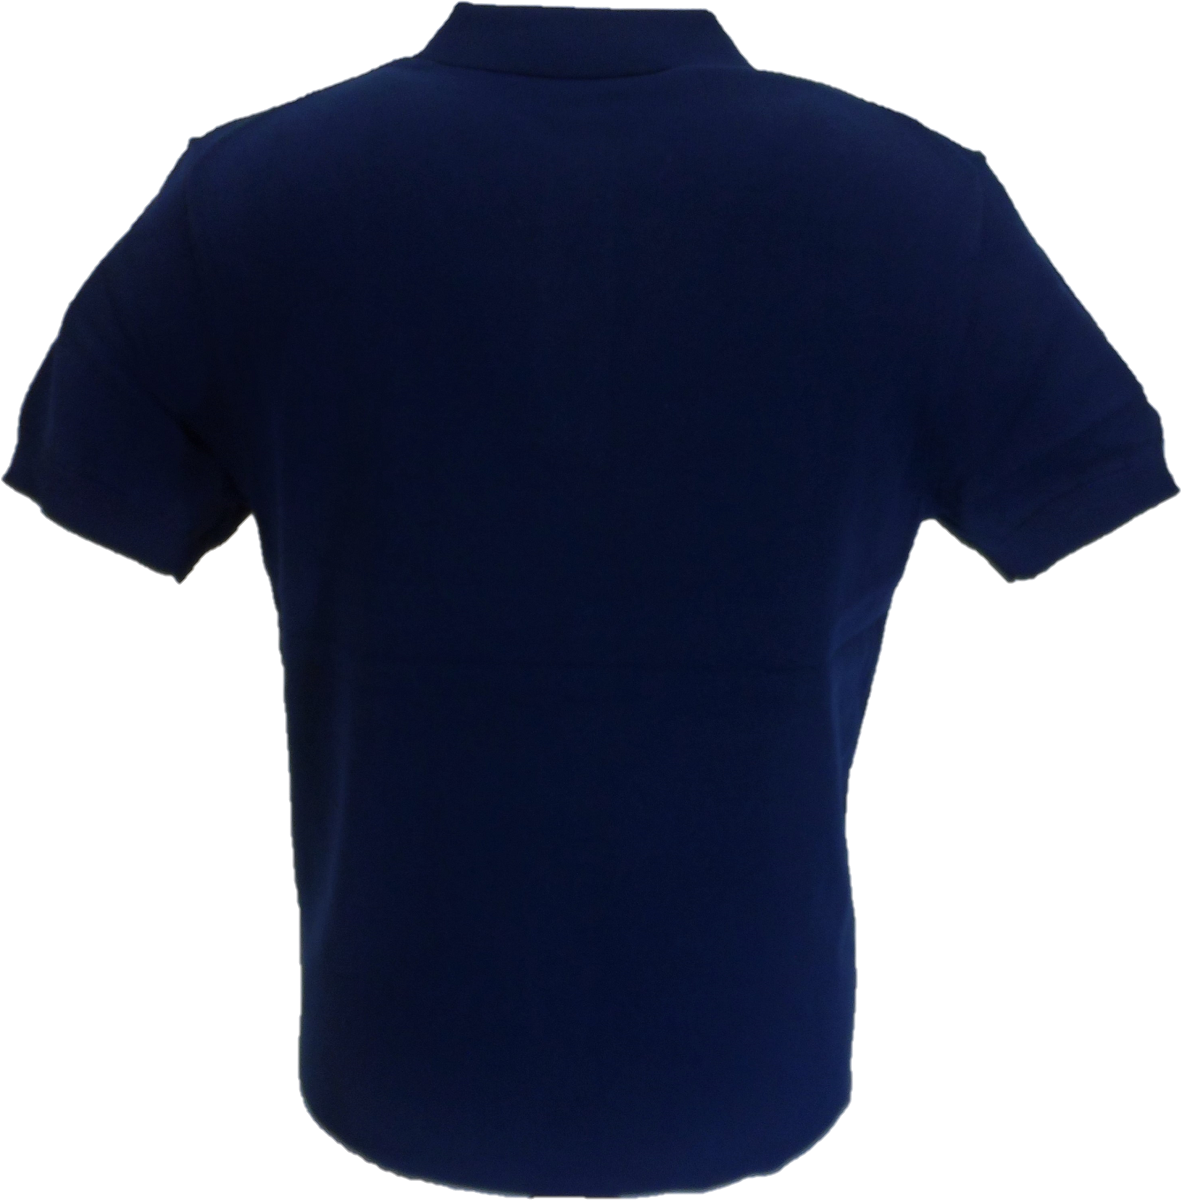 Merc Herren Derrick marineblaue Vintage-Strick Mod Polo Shirts